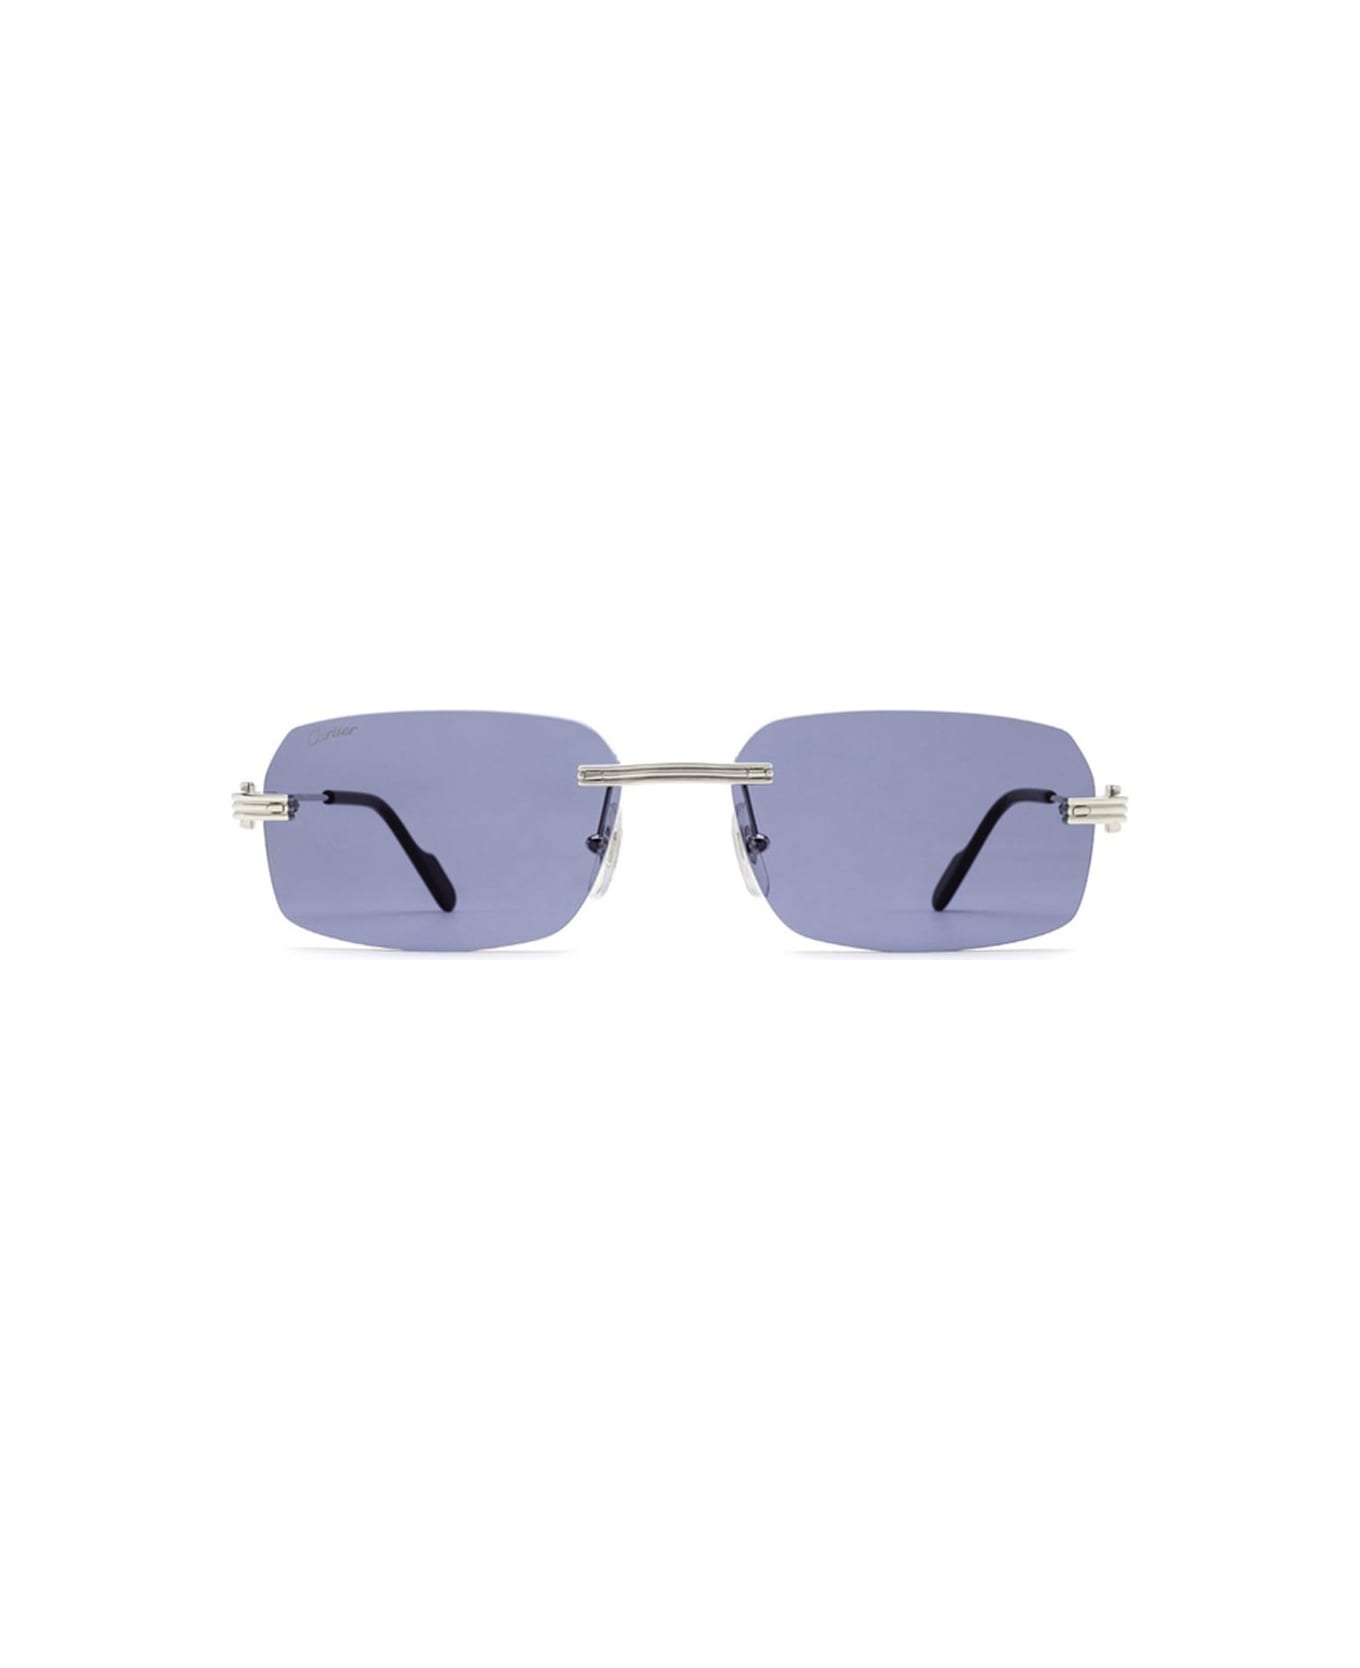 Cartier Eyewear Sunglasses - Silver/Blu サングラス